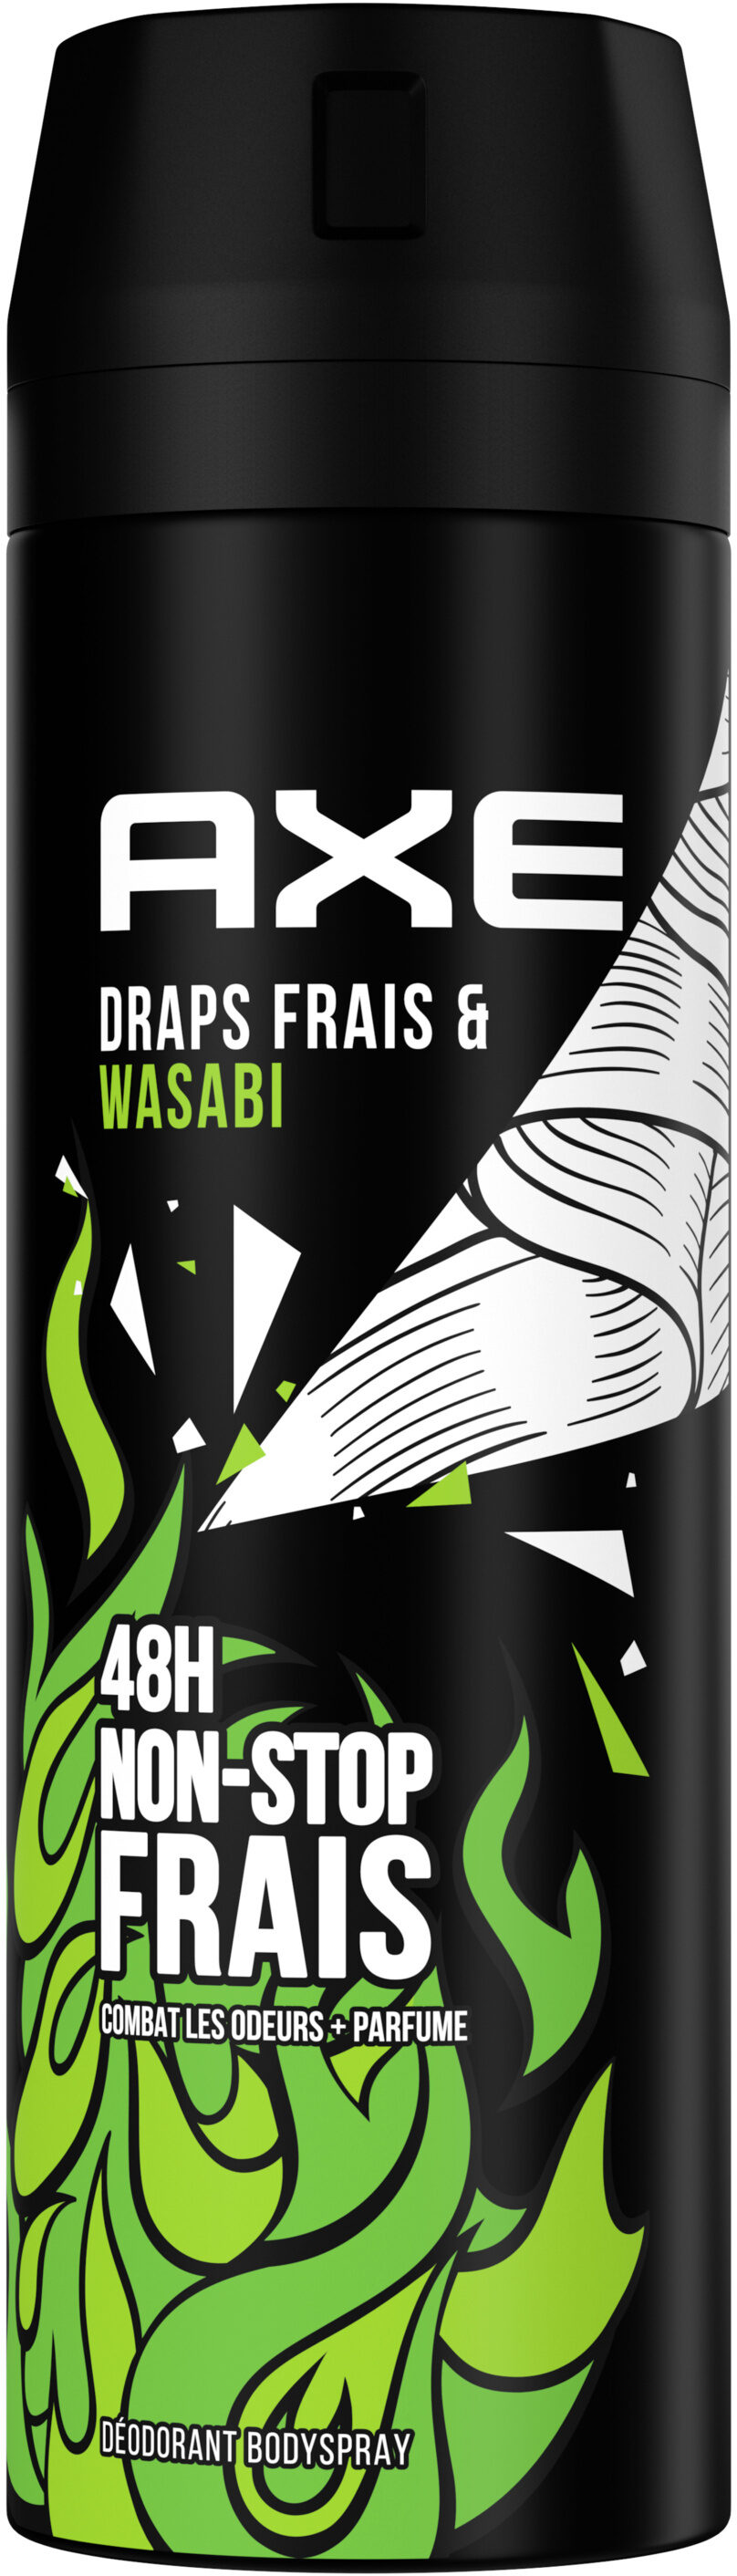 Déodorant Homme Bodyspray Draps Frais & Wasabi 48h Non-Stop Frais - Produit - fr